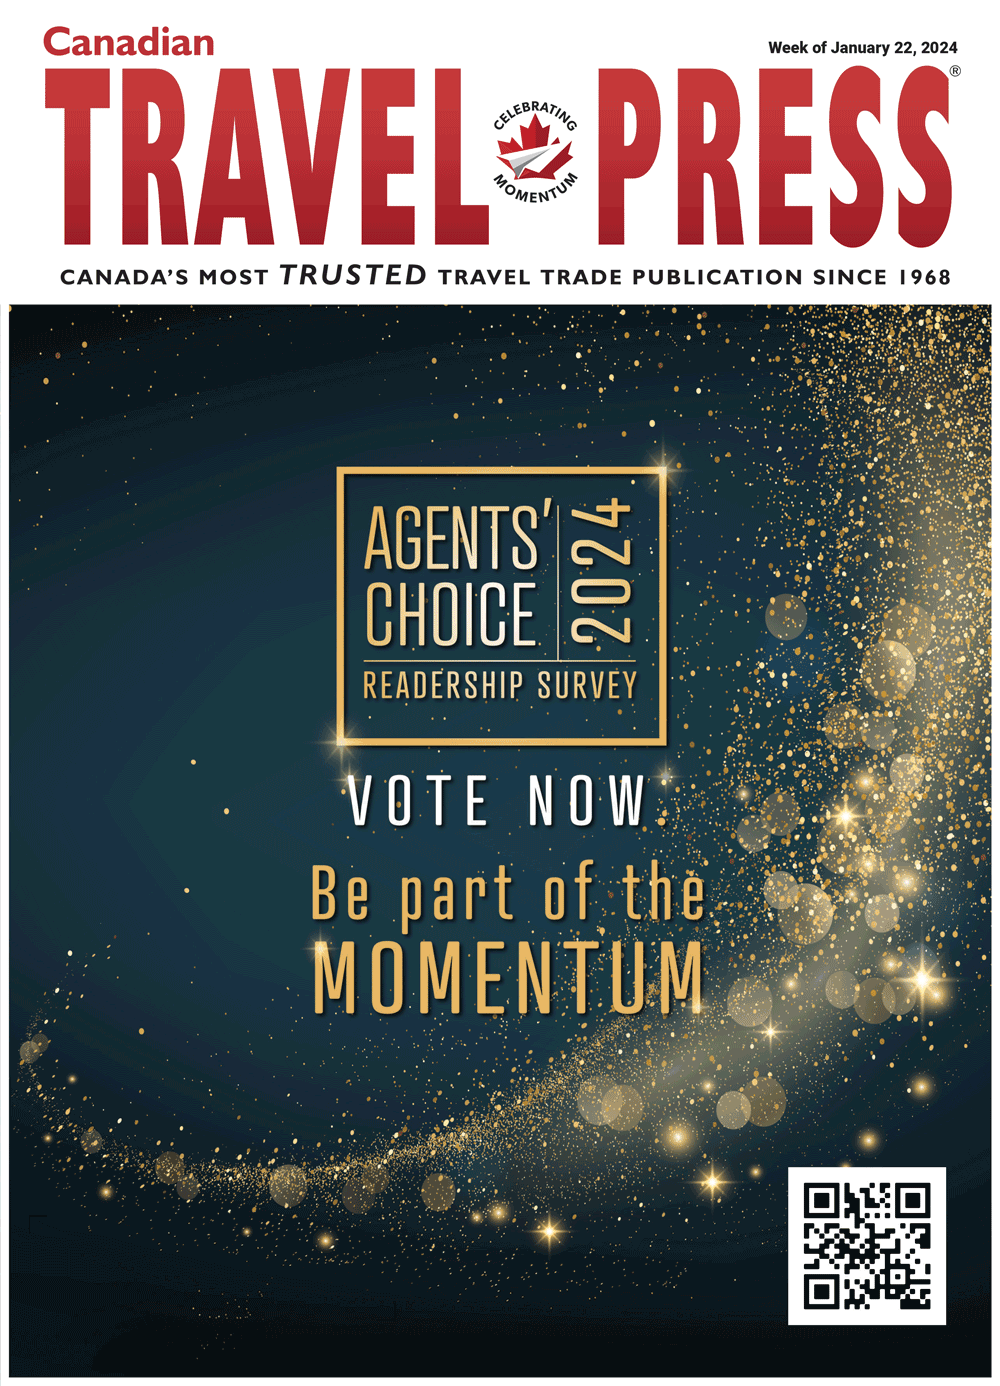 Agents’ Choice Readership Awards Survey is back!